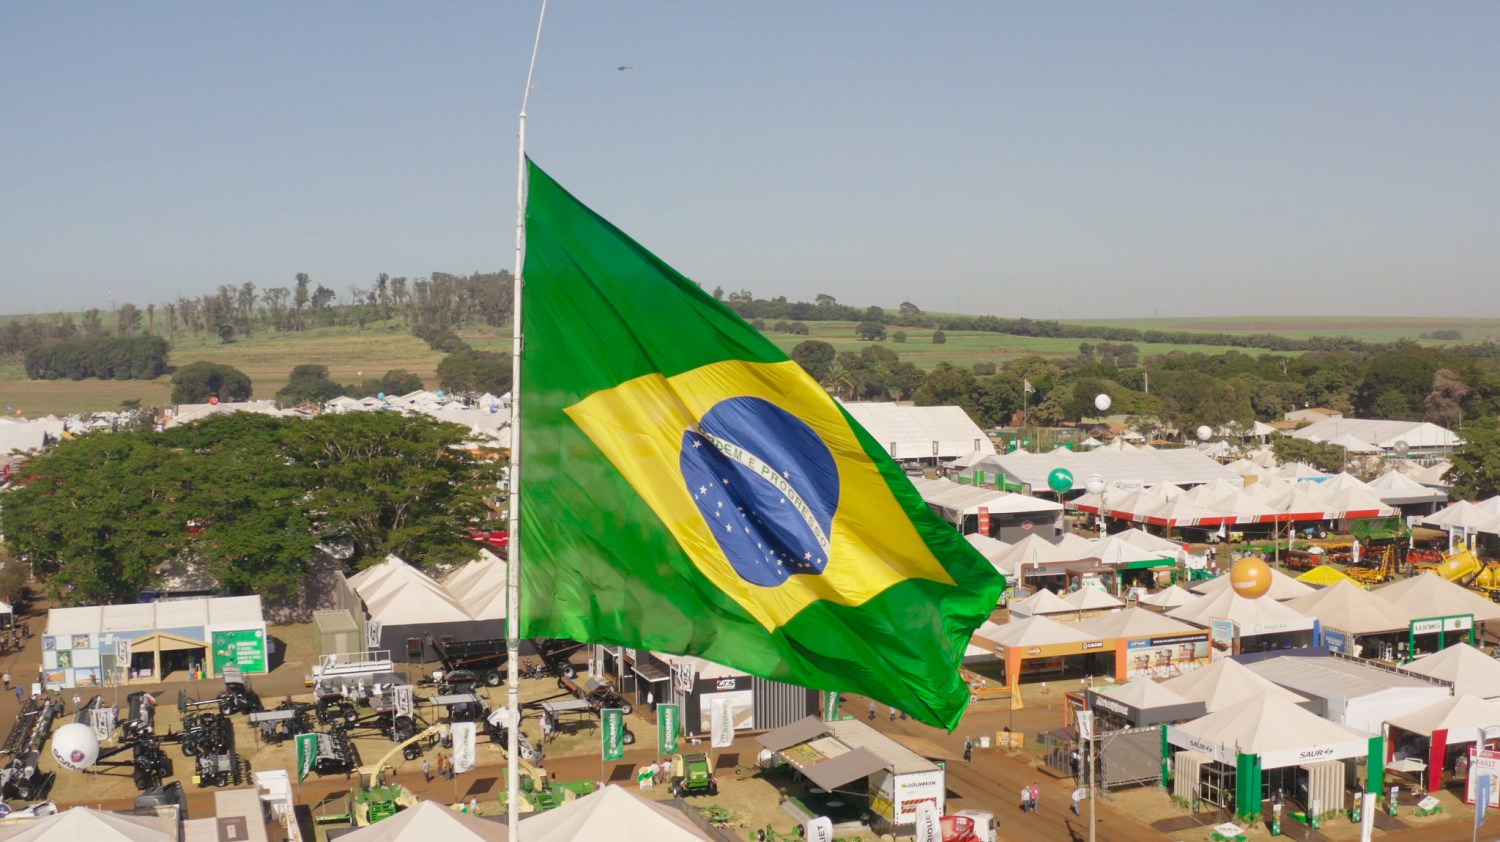 agrishow oficial - fotao aerea 4 bandeira do brasil